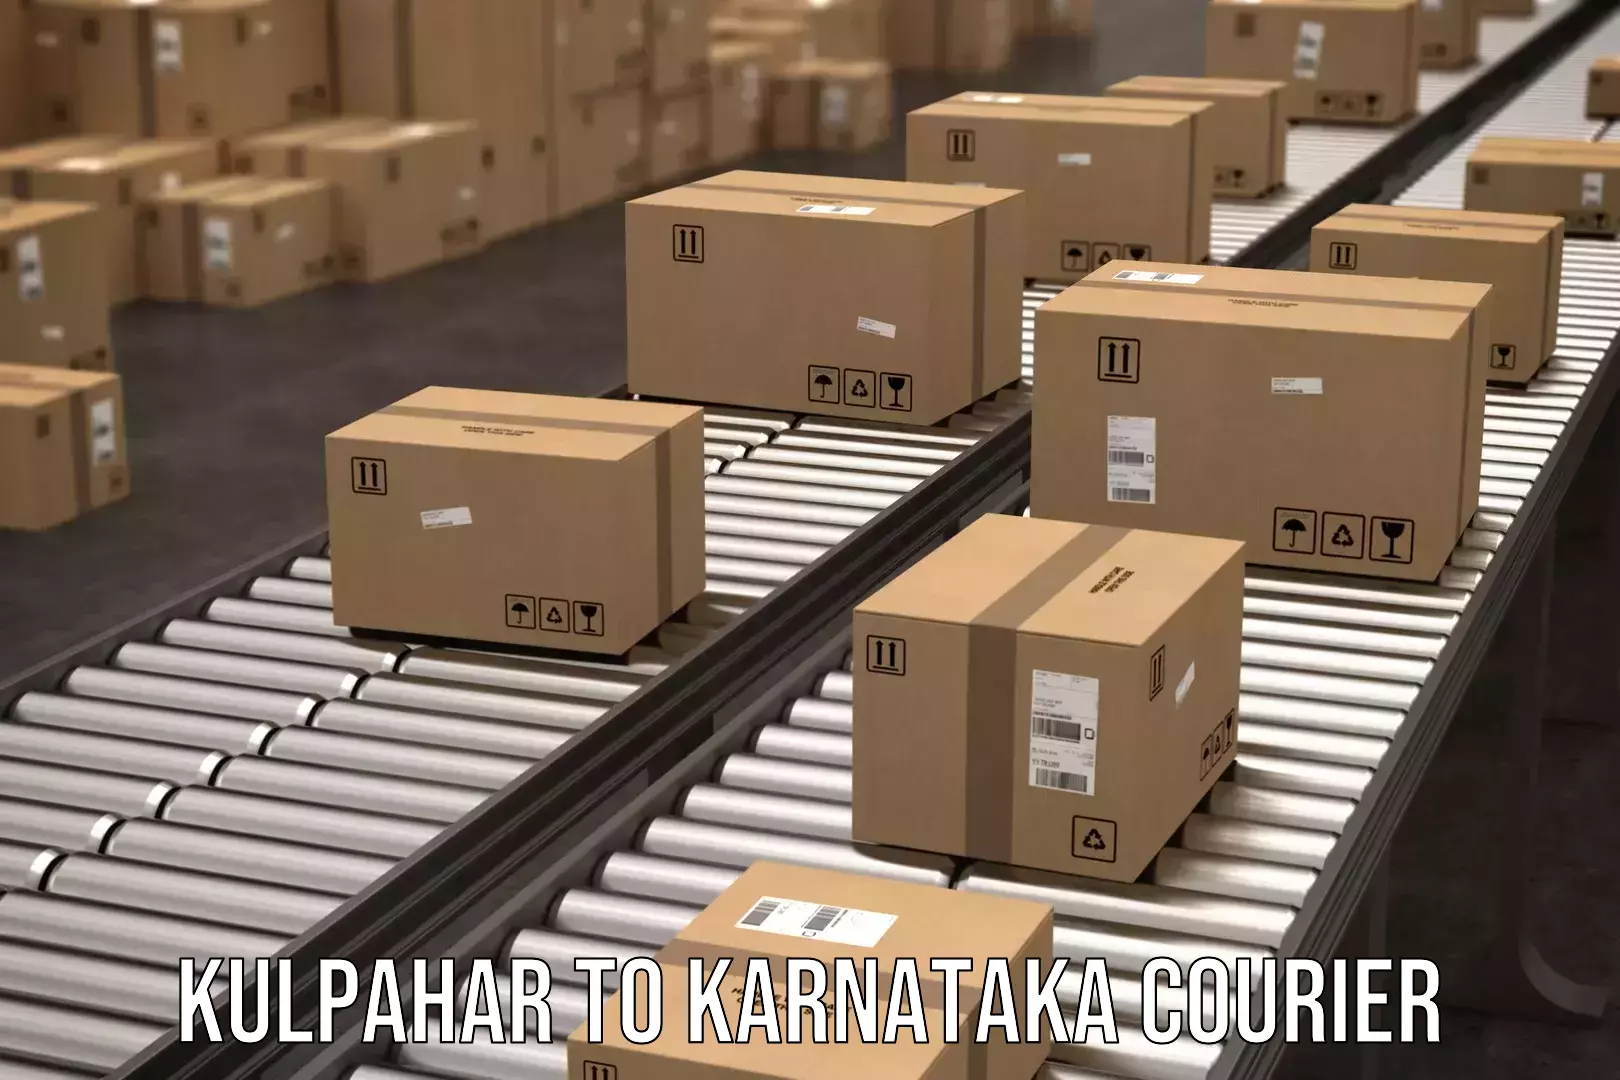 Courier service innovation Kulpahar to Karnataka